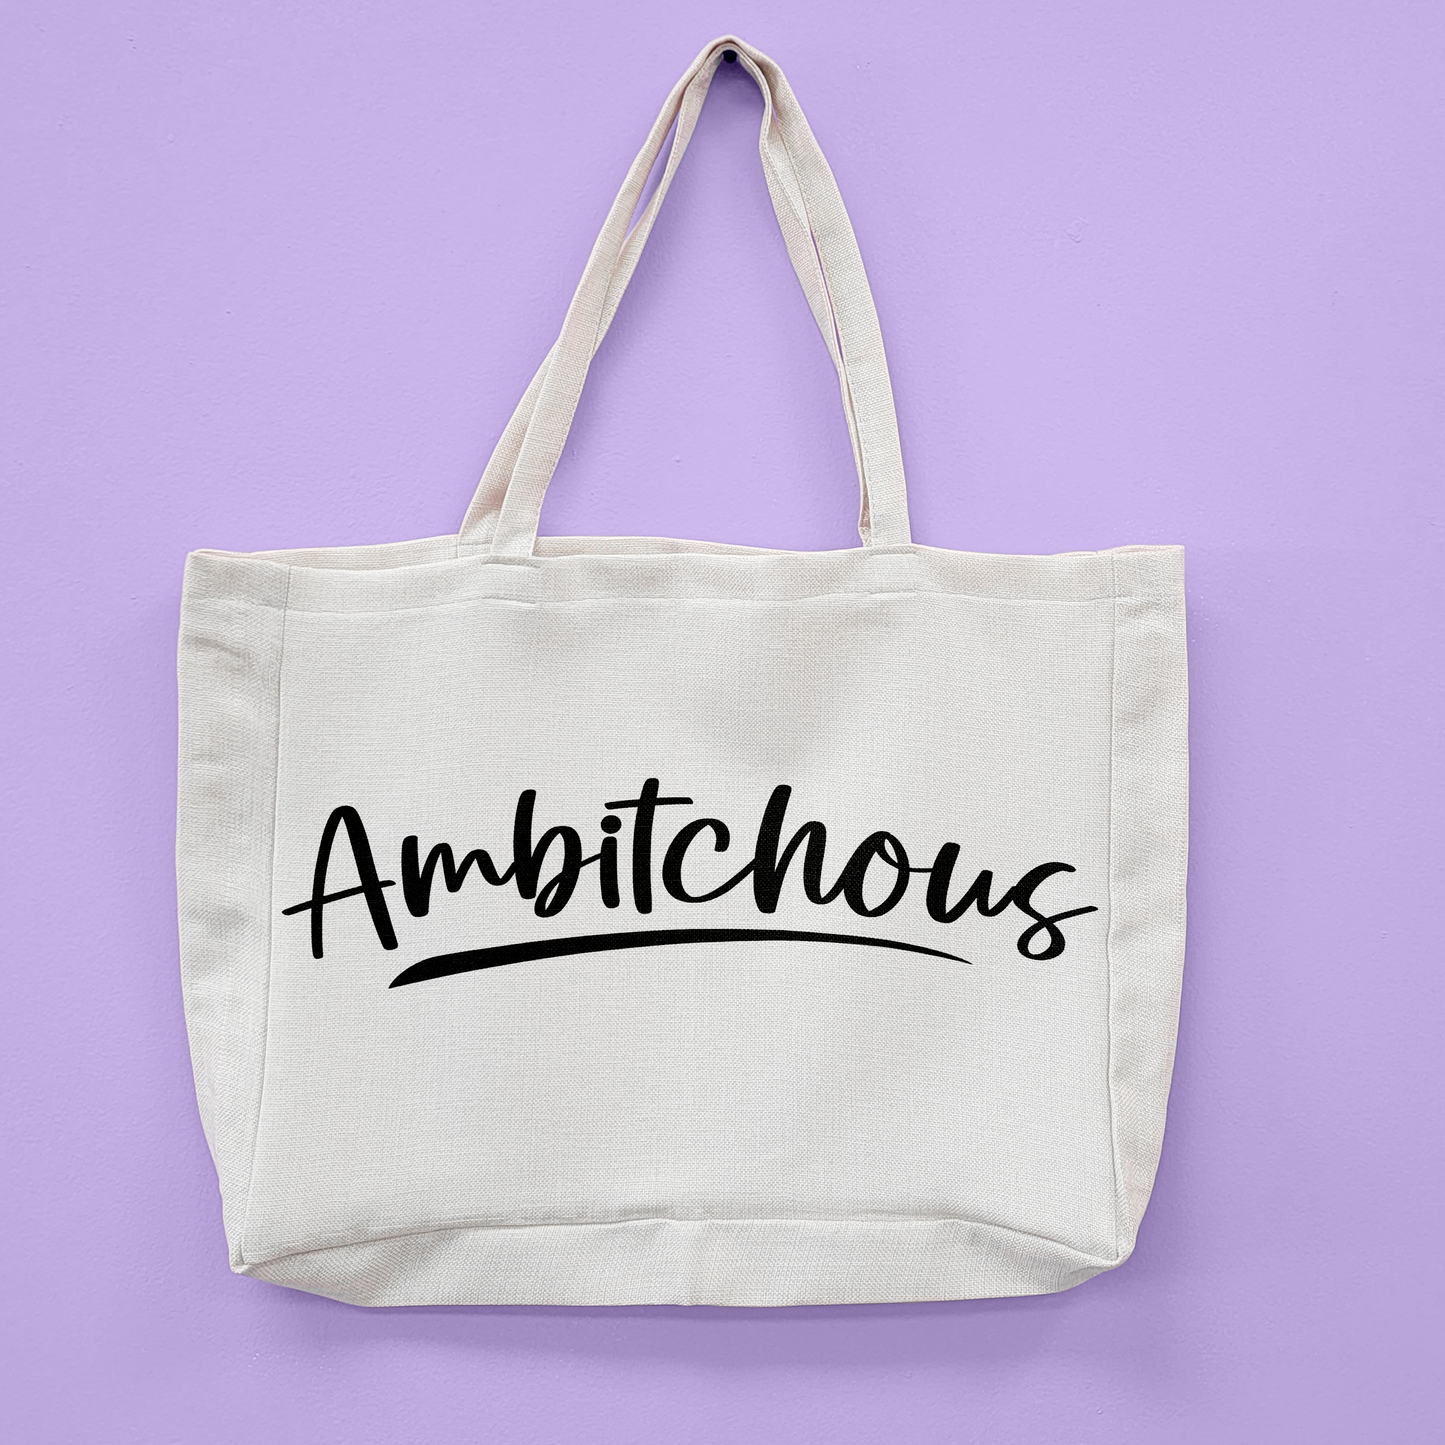 Ambitchous Oversized Tote Bag